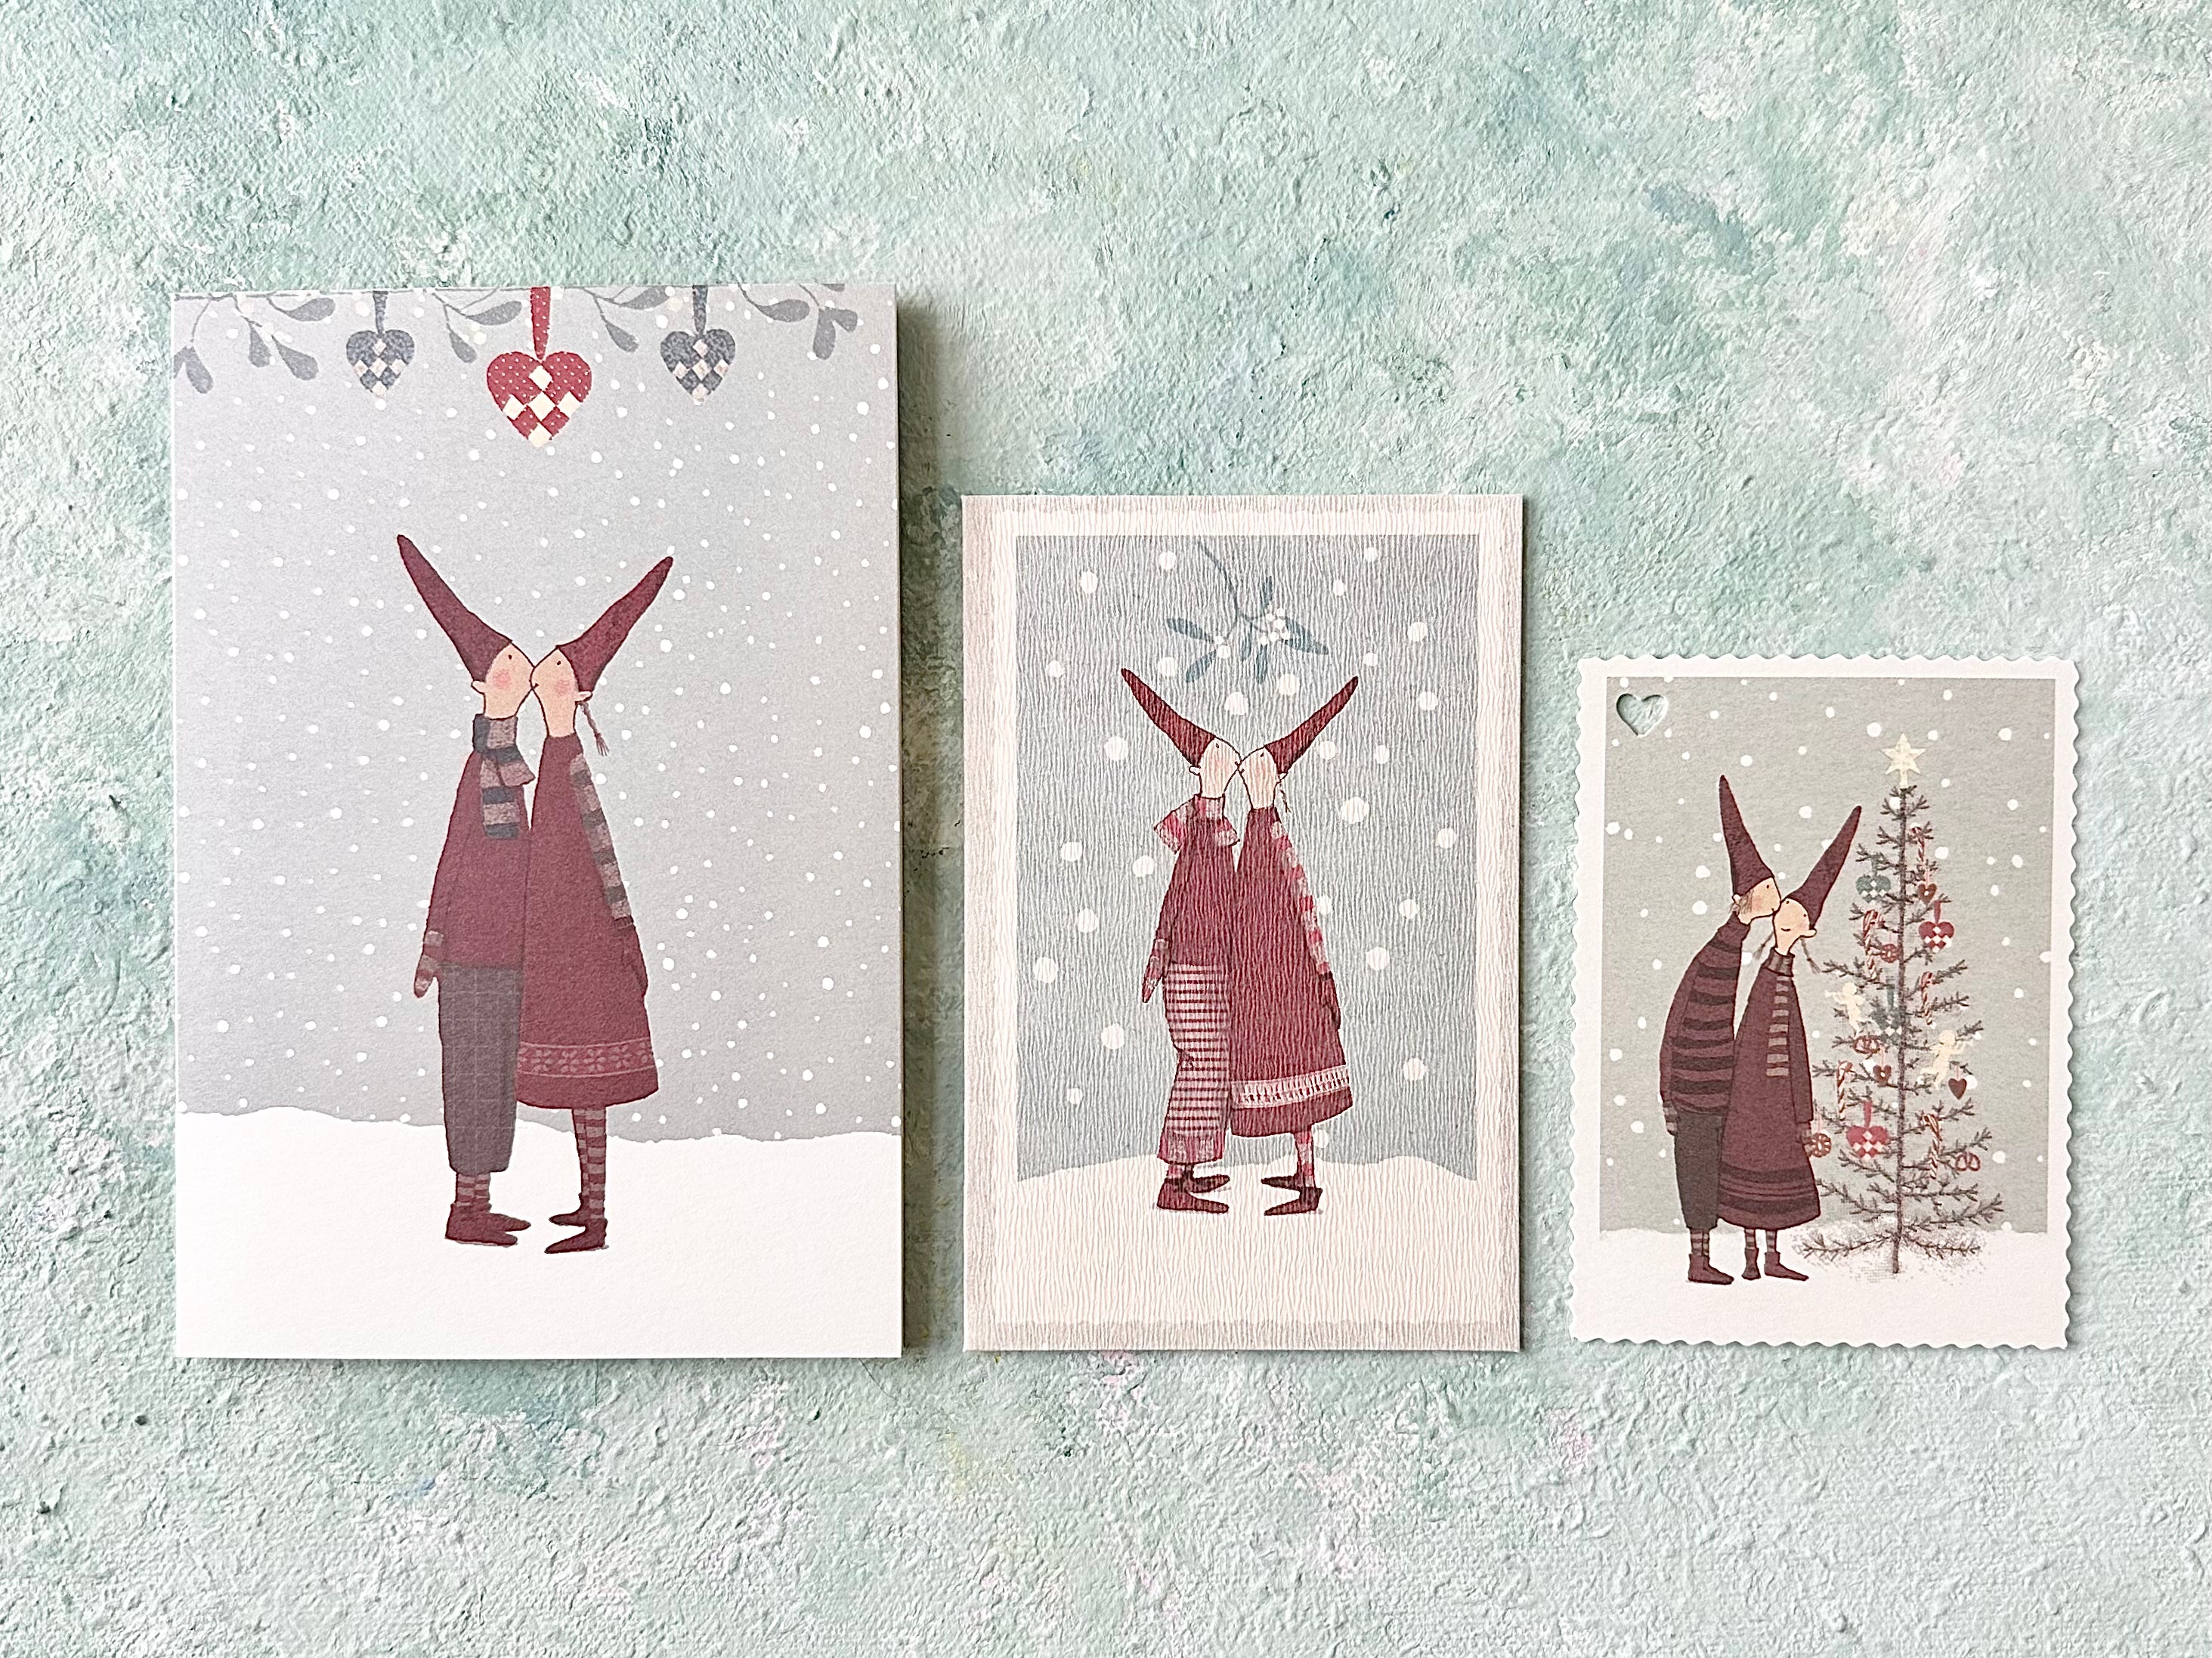 Small Christmas Card “Tree” - 2007